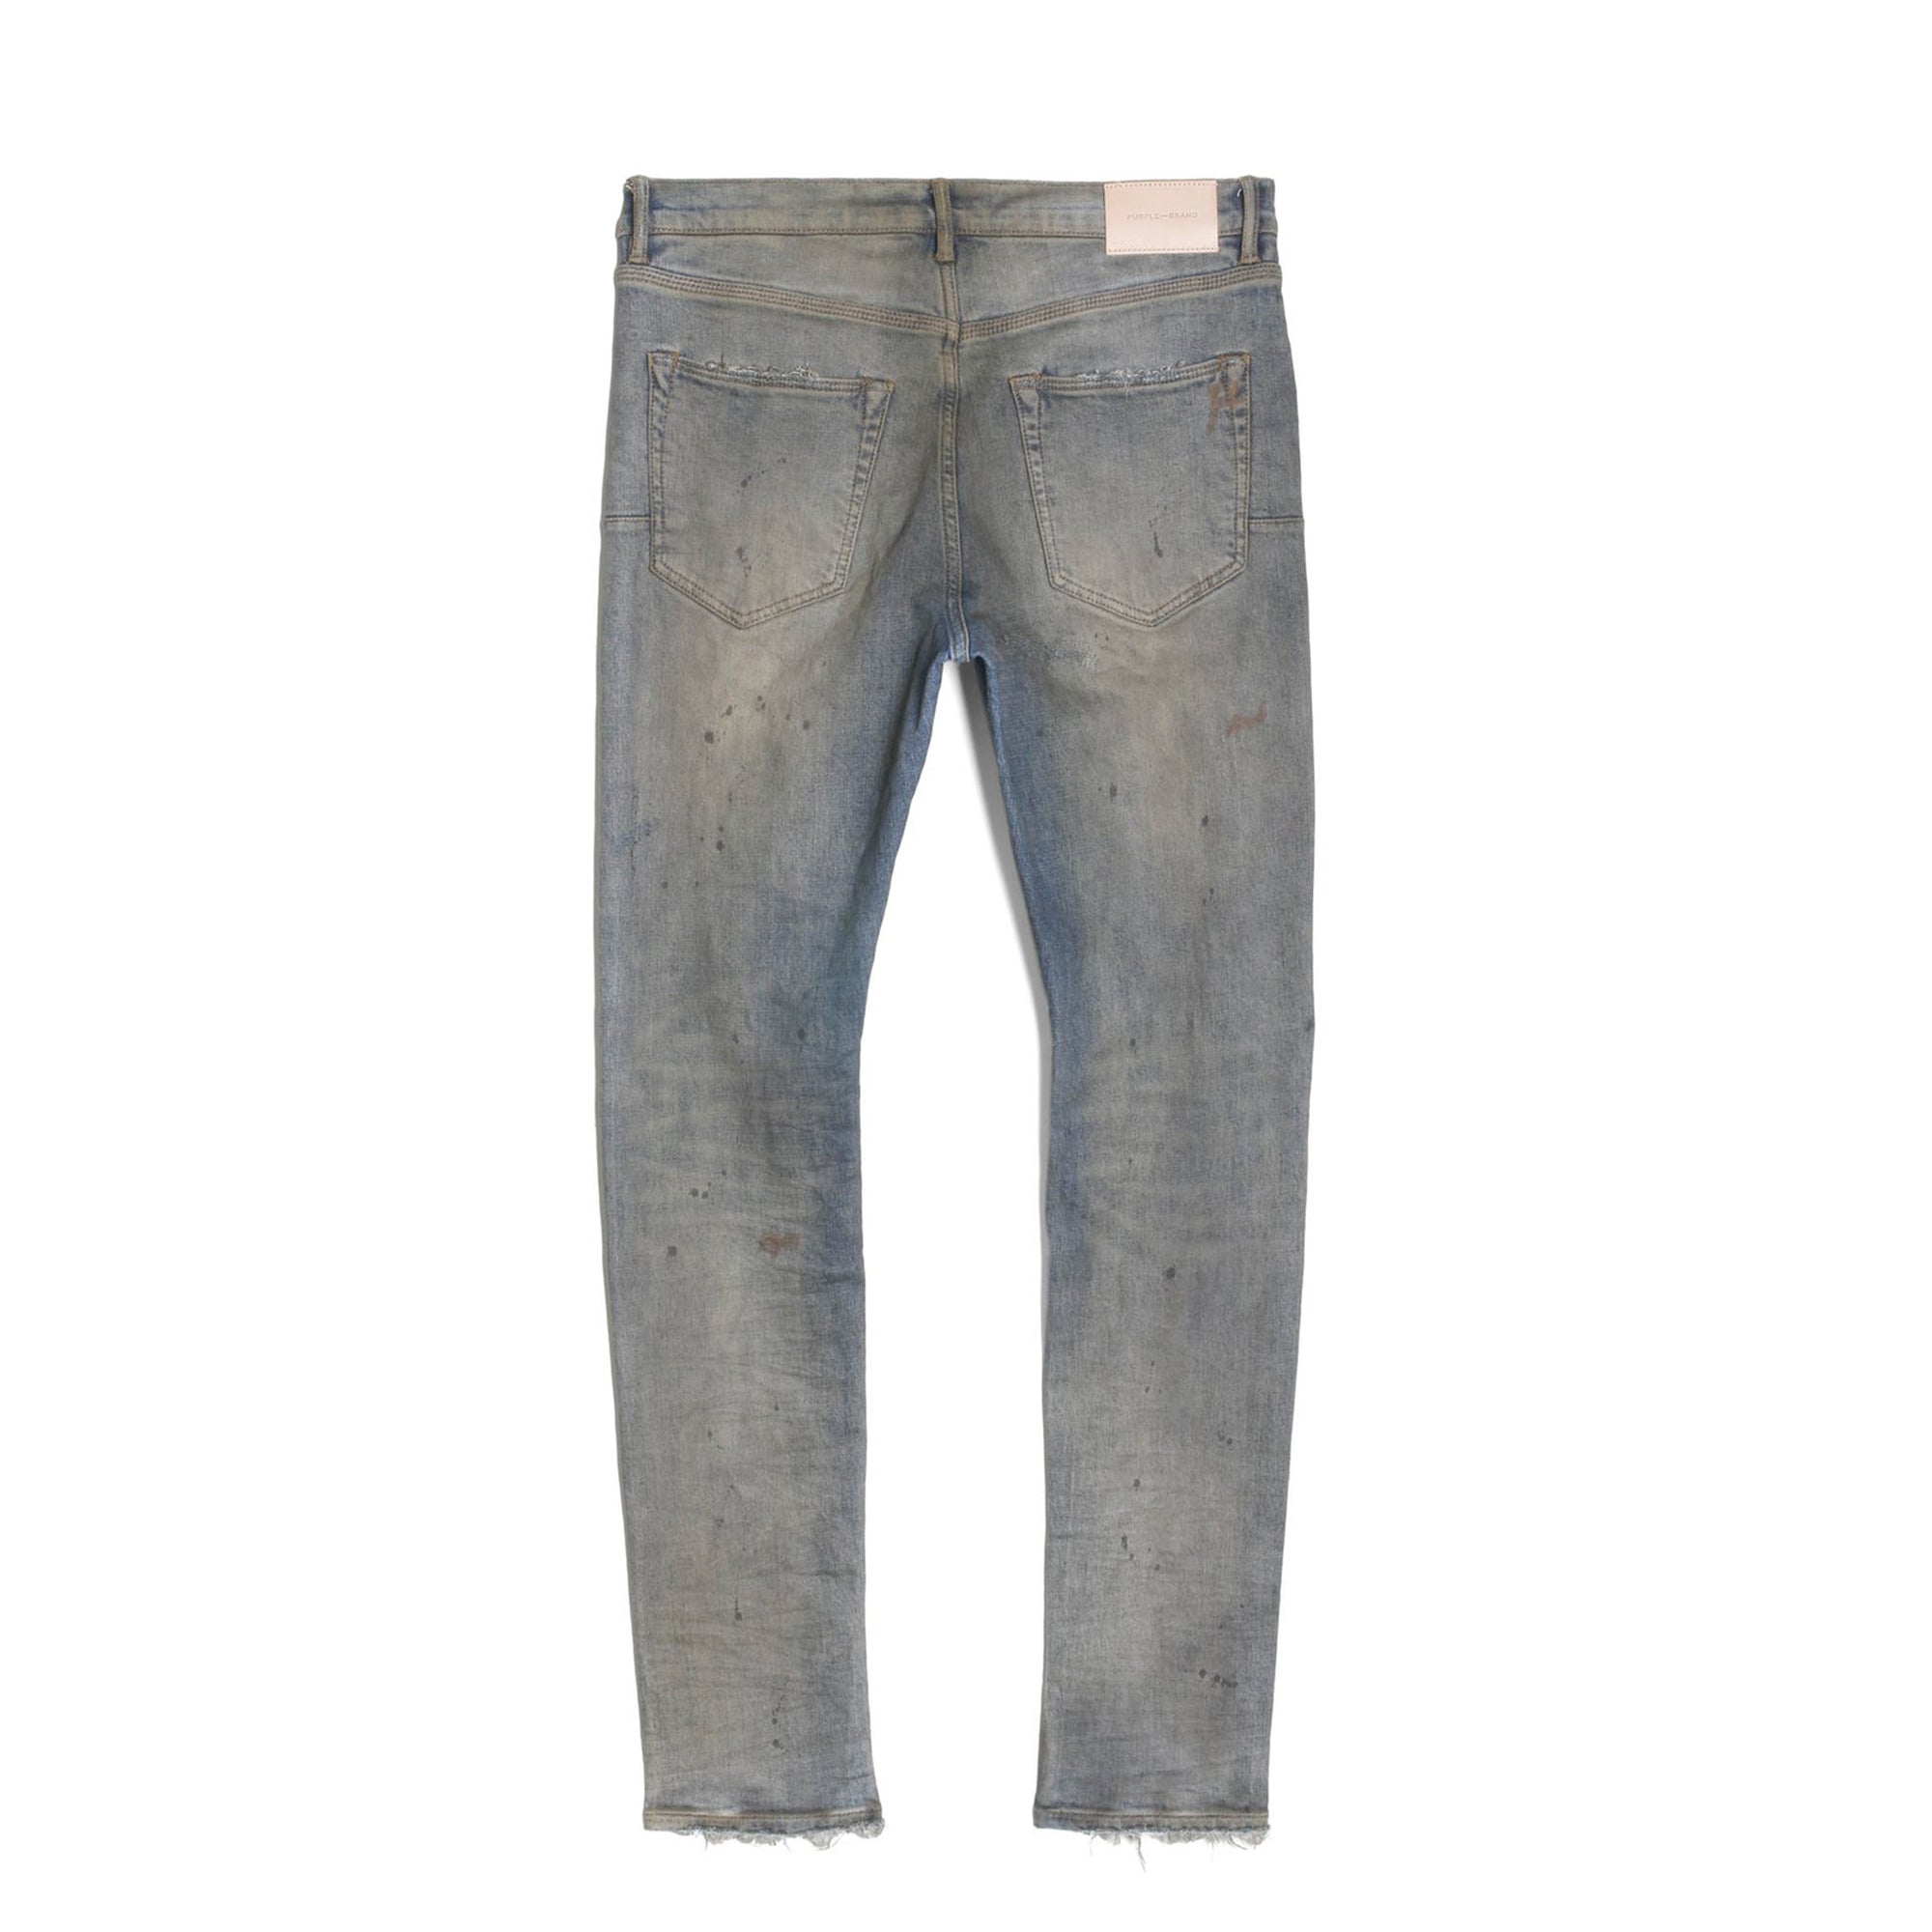 Buy Indigo Jeans for Men by Barrels And Oil Online